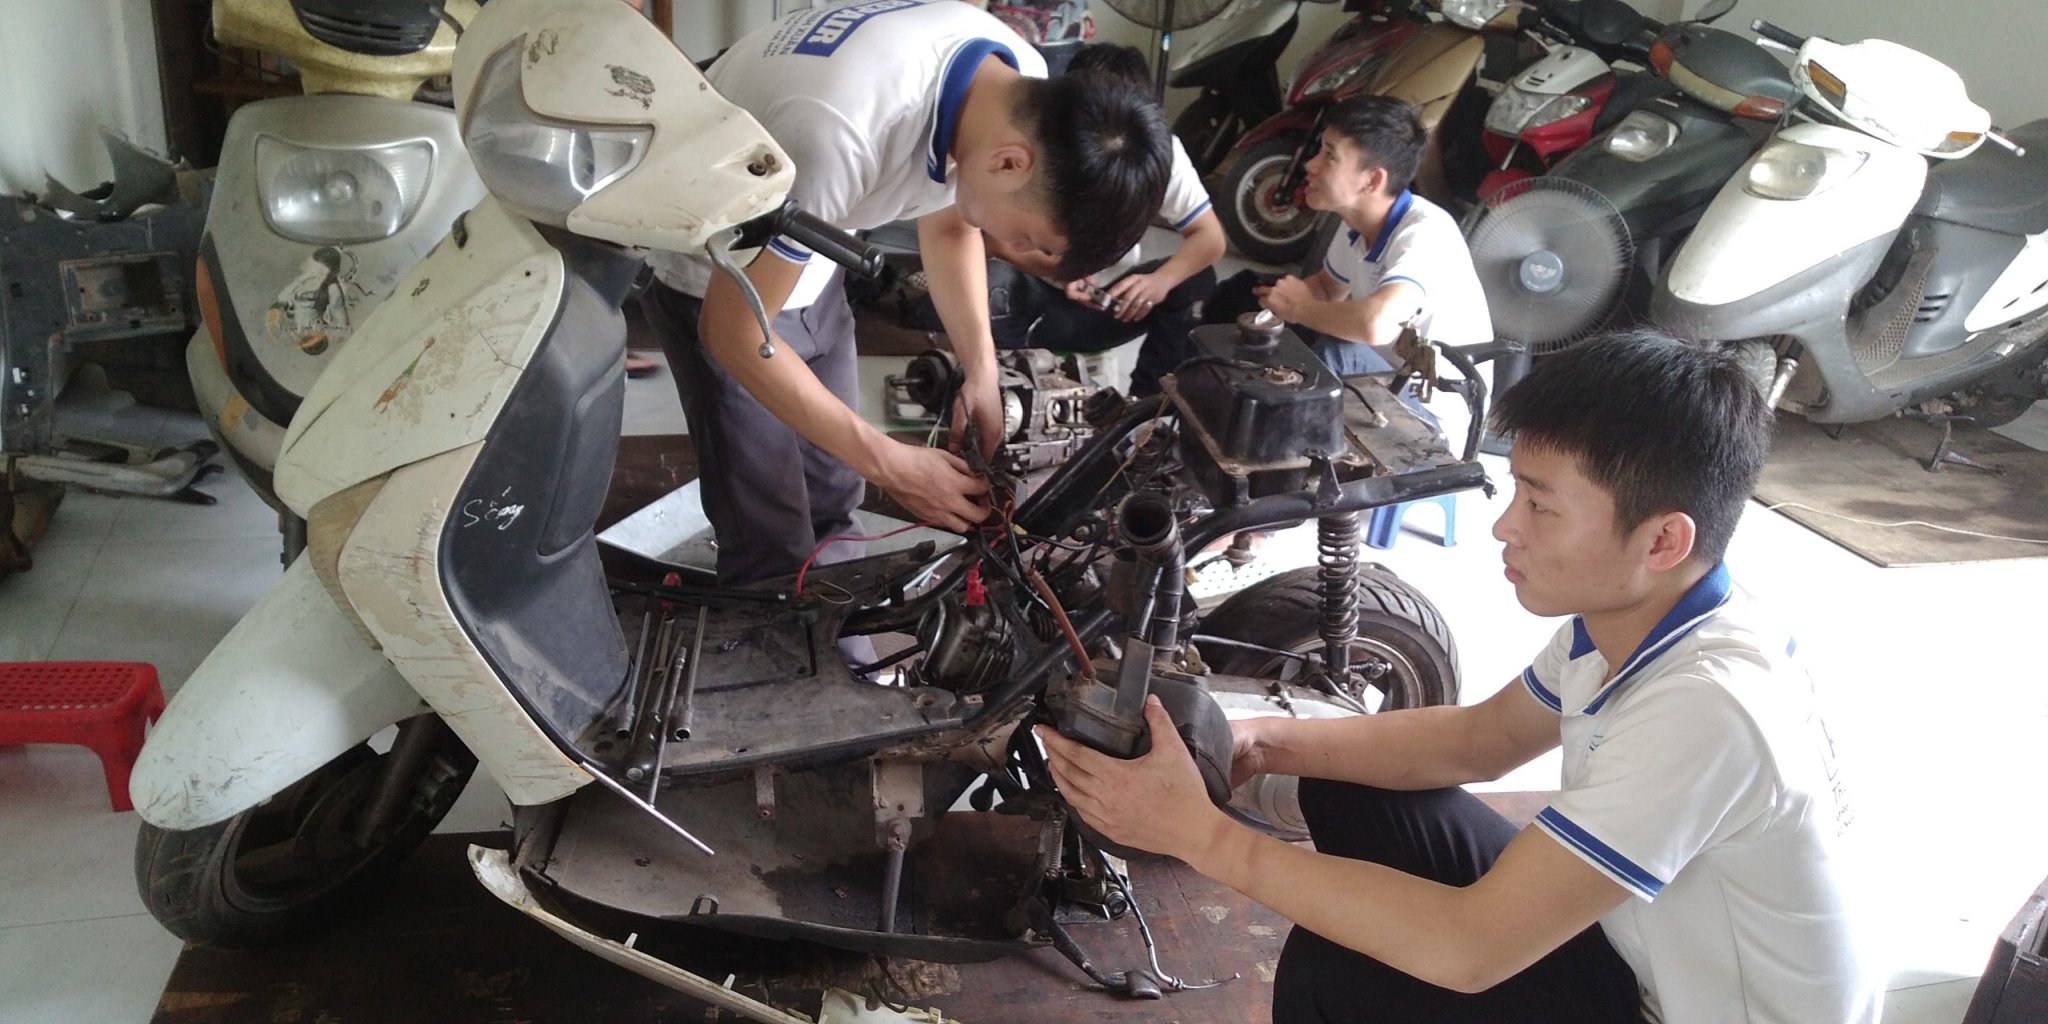 Lớp học sửa chữa xe máy